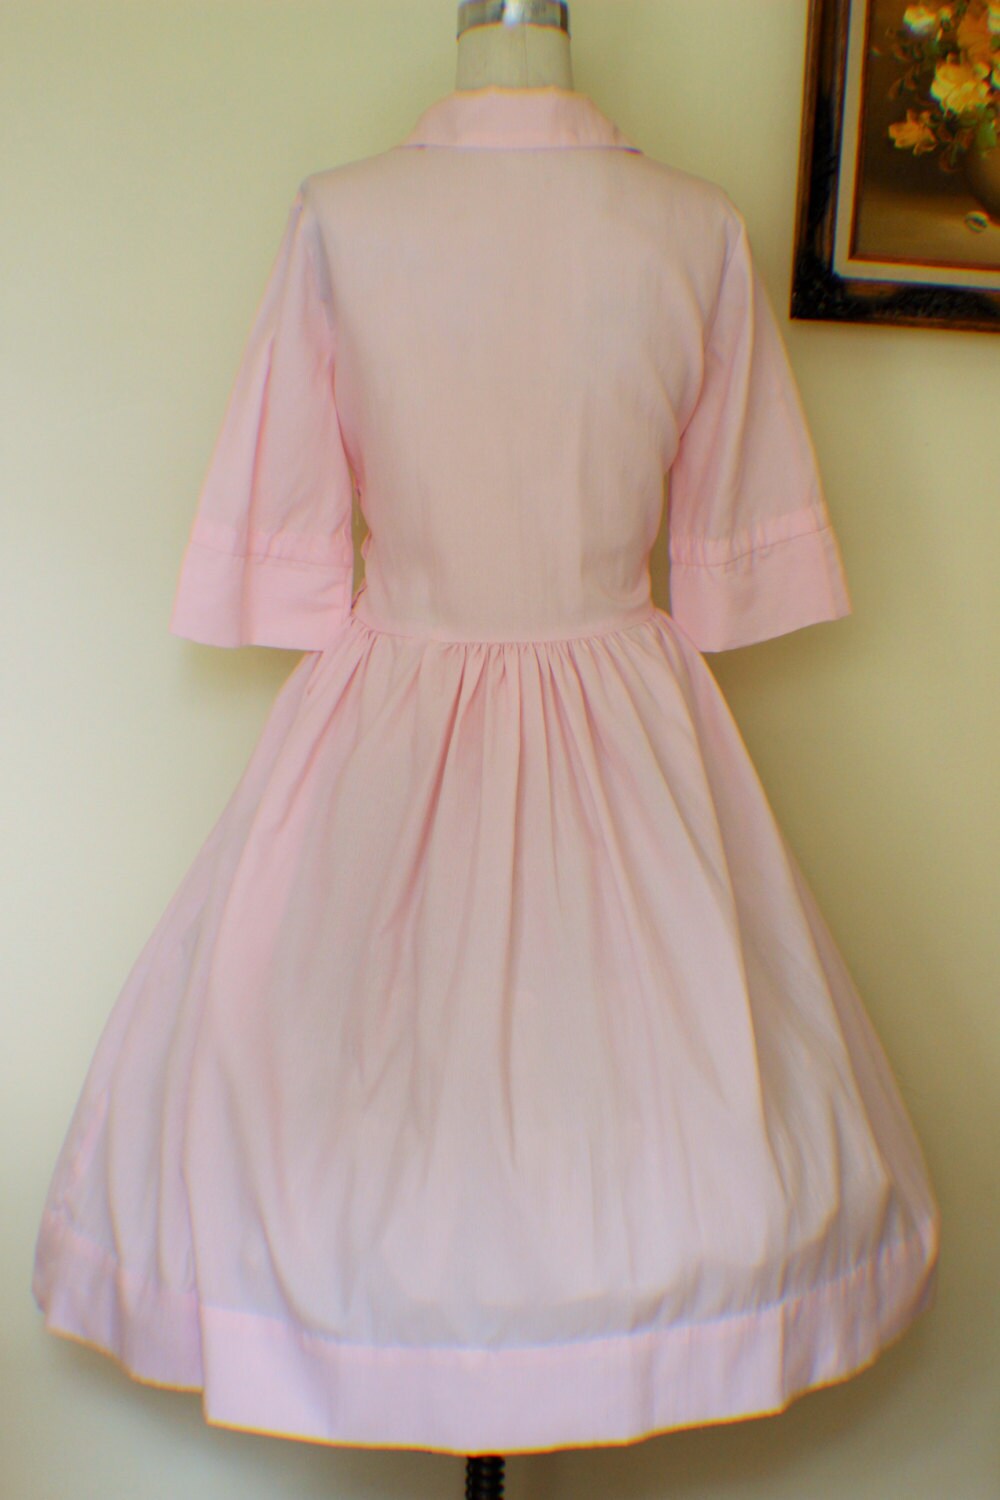 Vintage 1940s Pink Dress / Late 40s Dress by ToadstoolFarmVintage